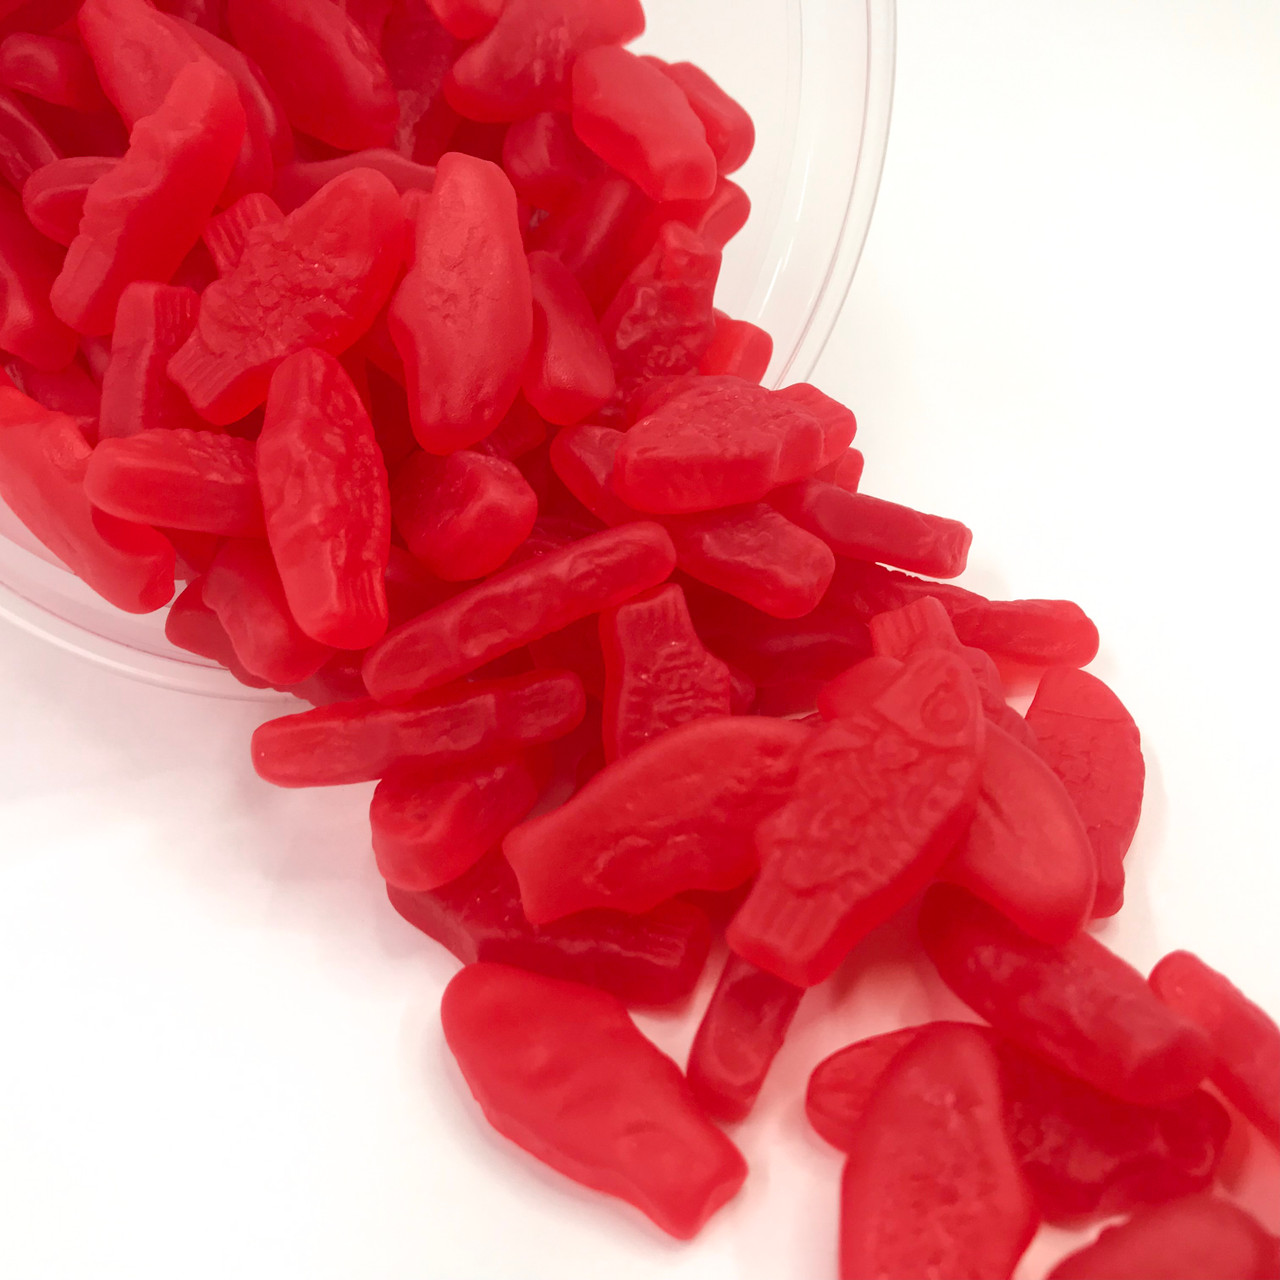 Mini Red Swedish Fish - Stutz Candy Company, Inc.